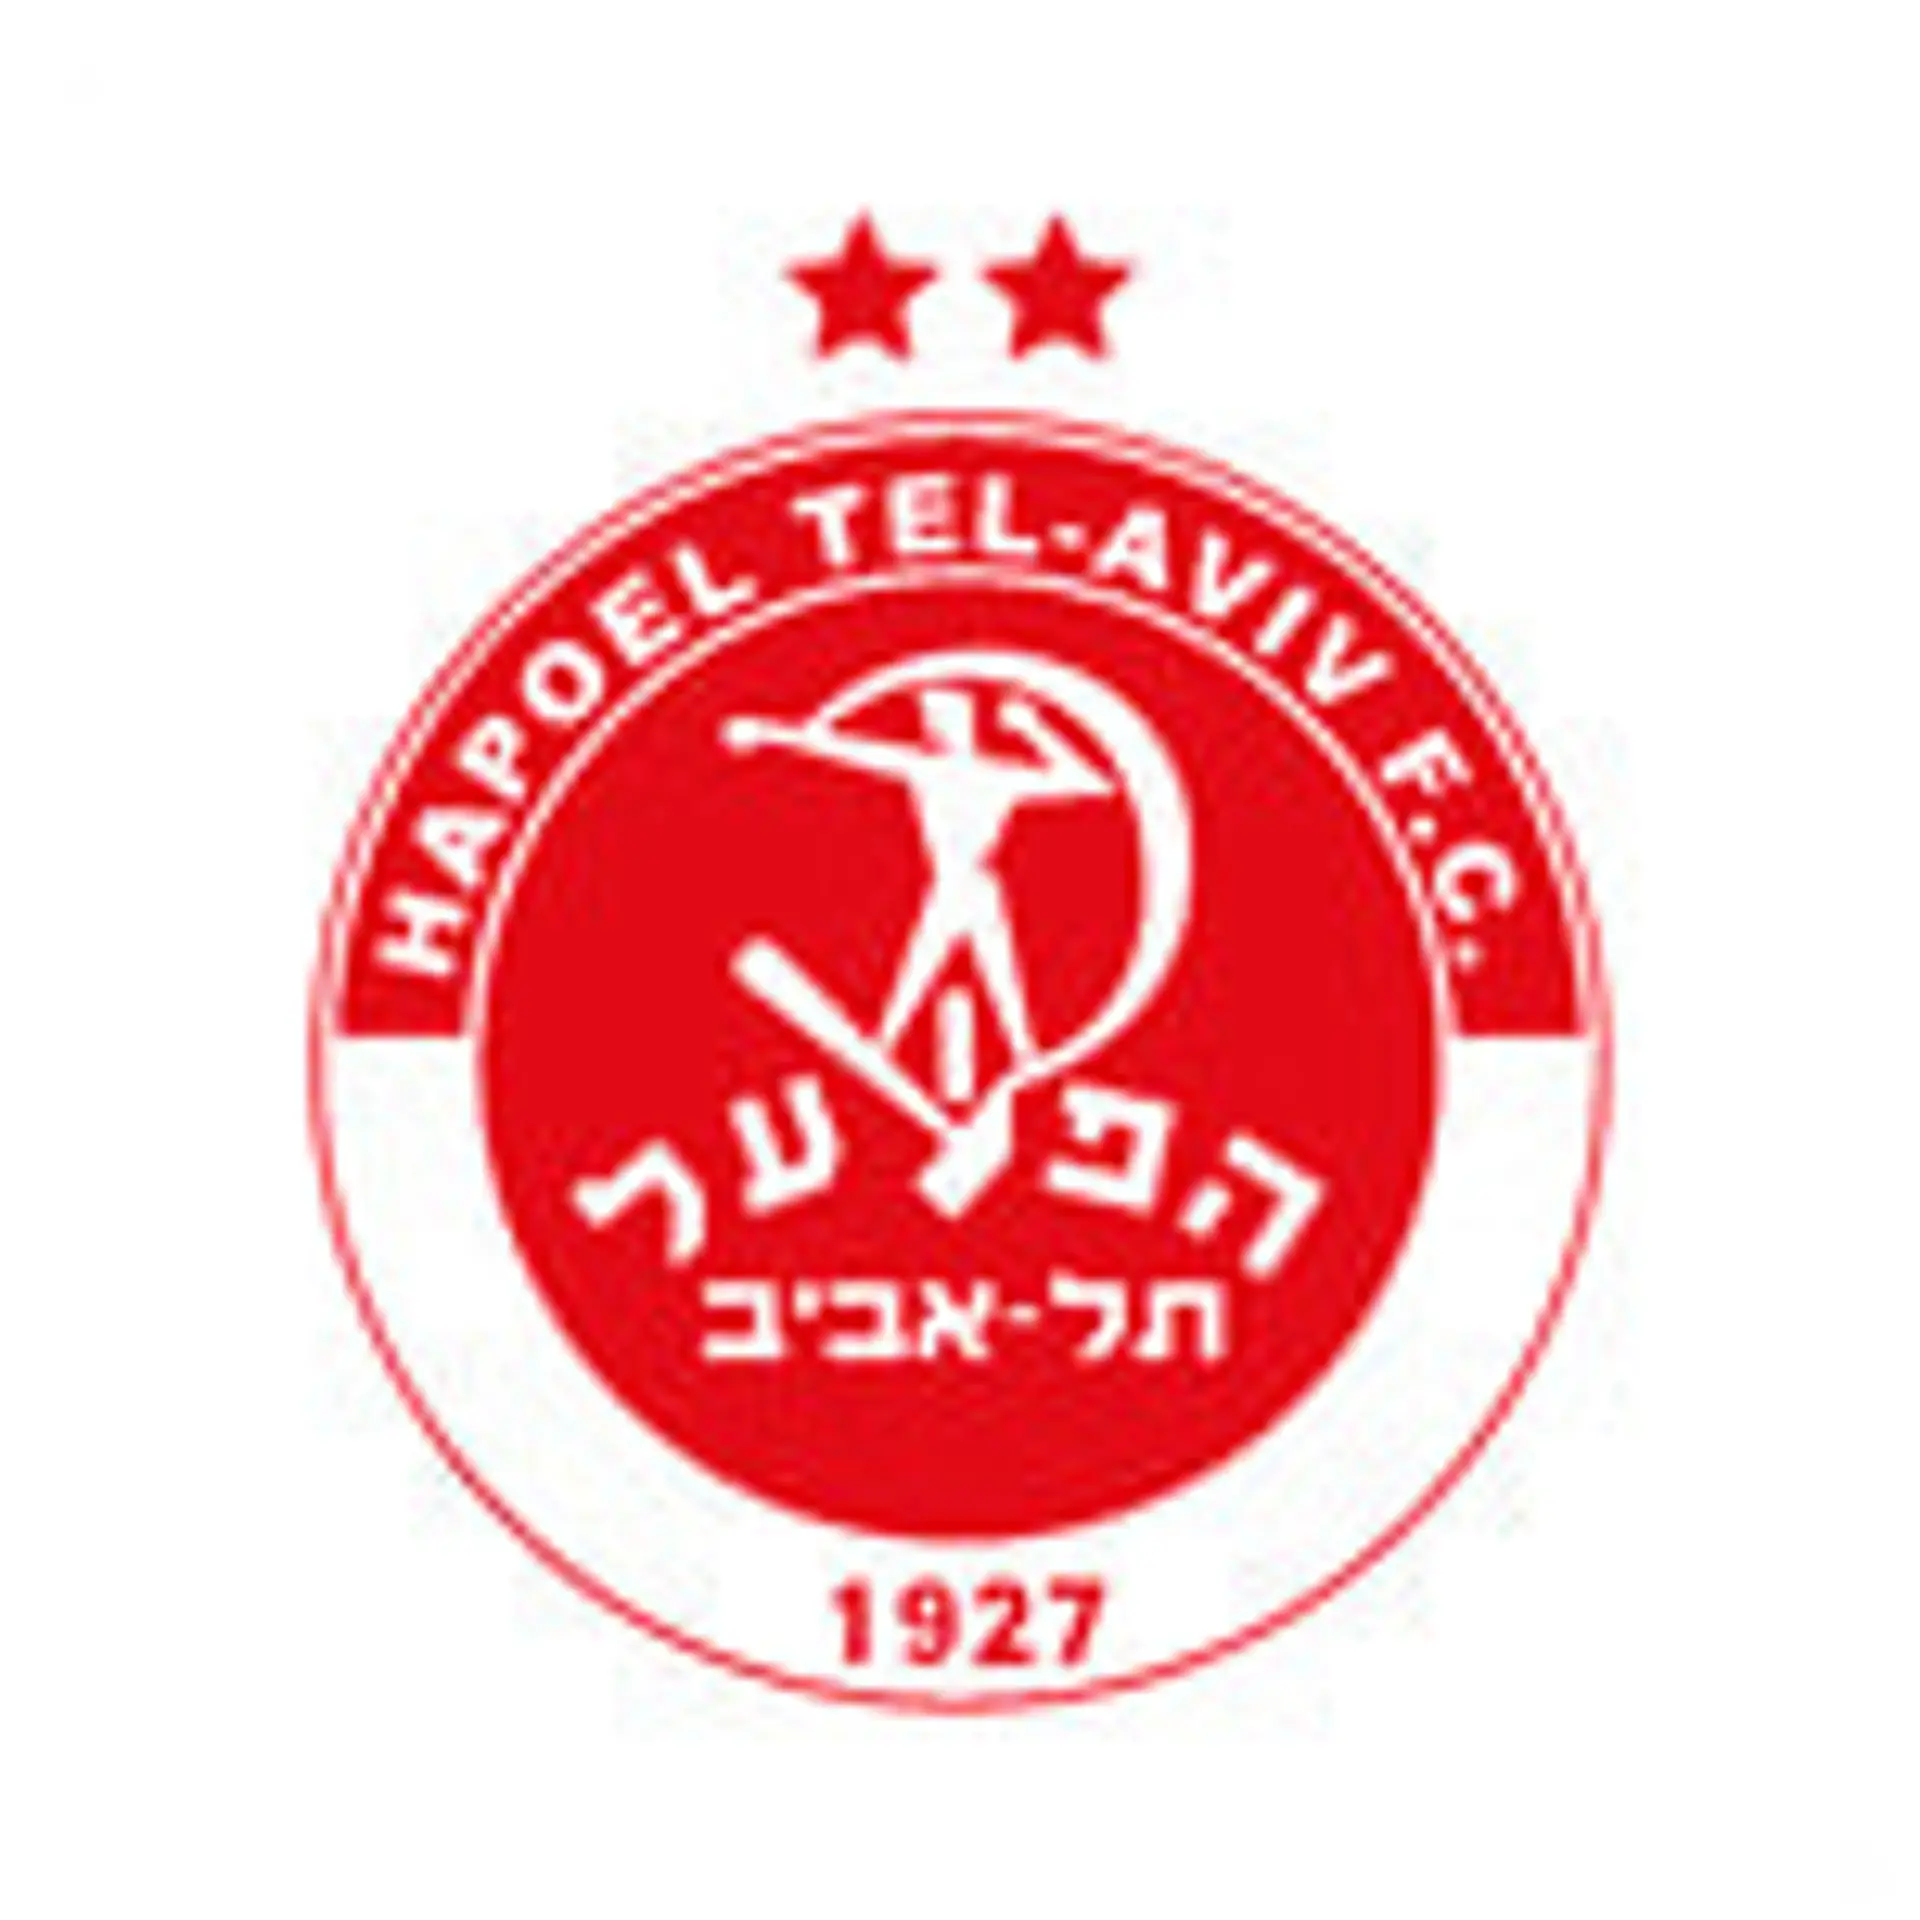 Hapoël Tel Aviv Equipe